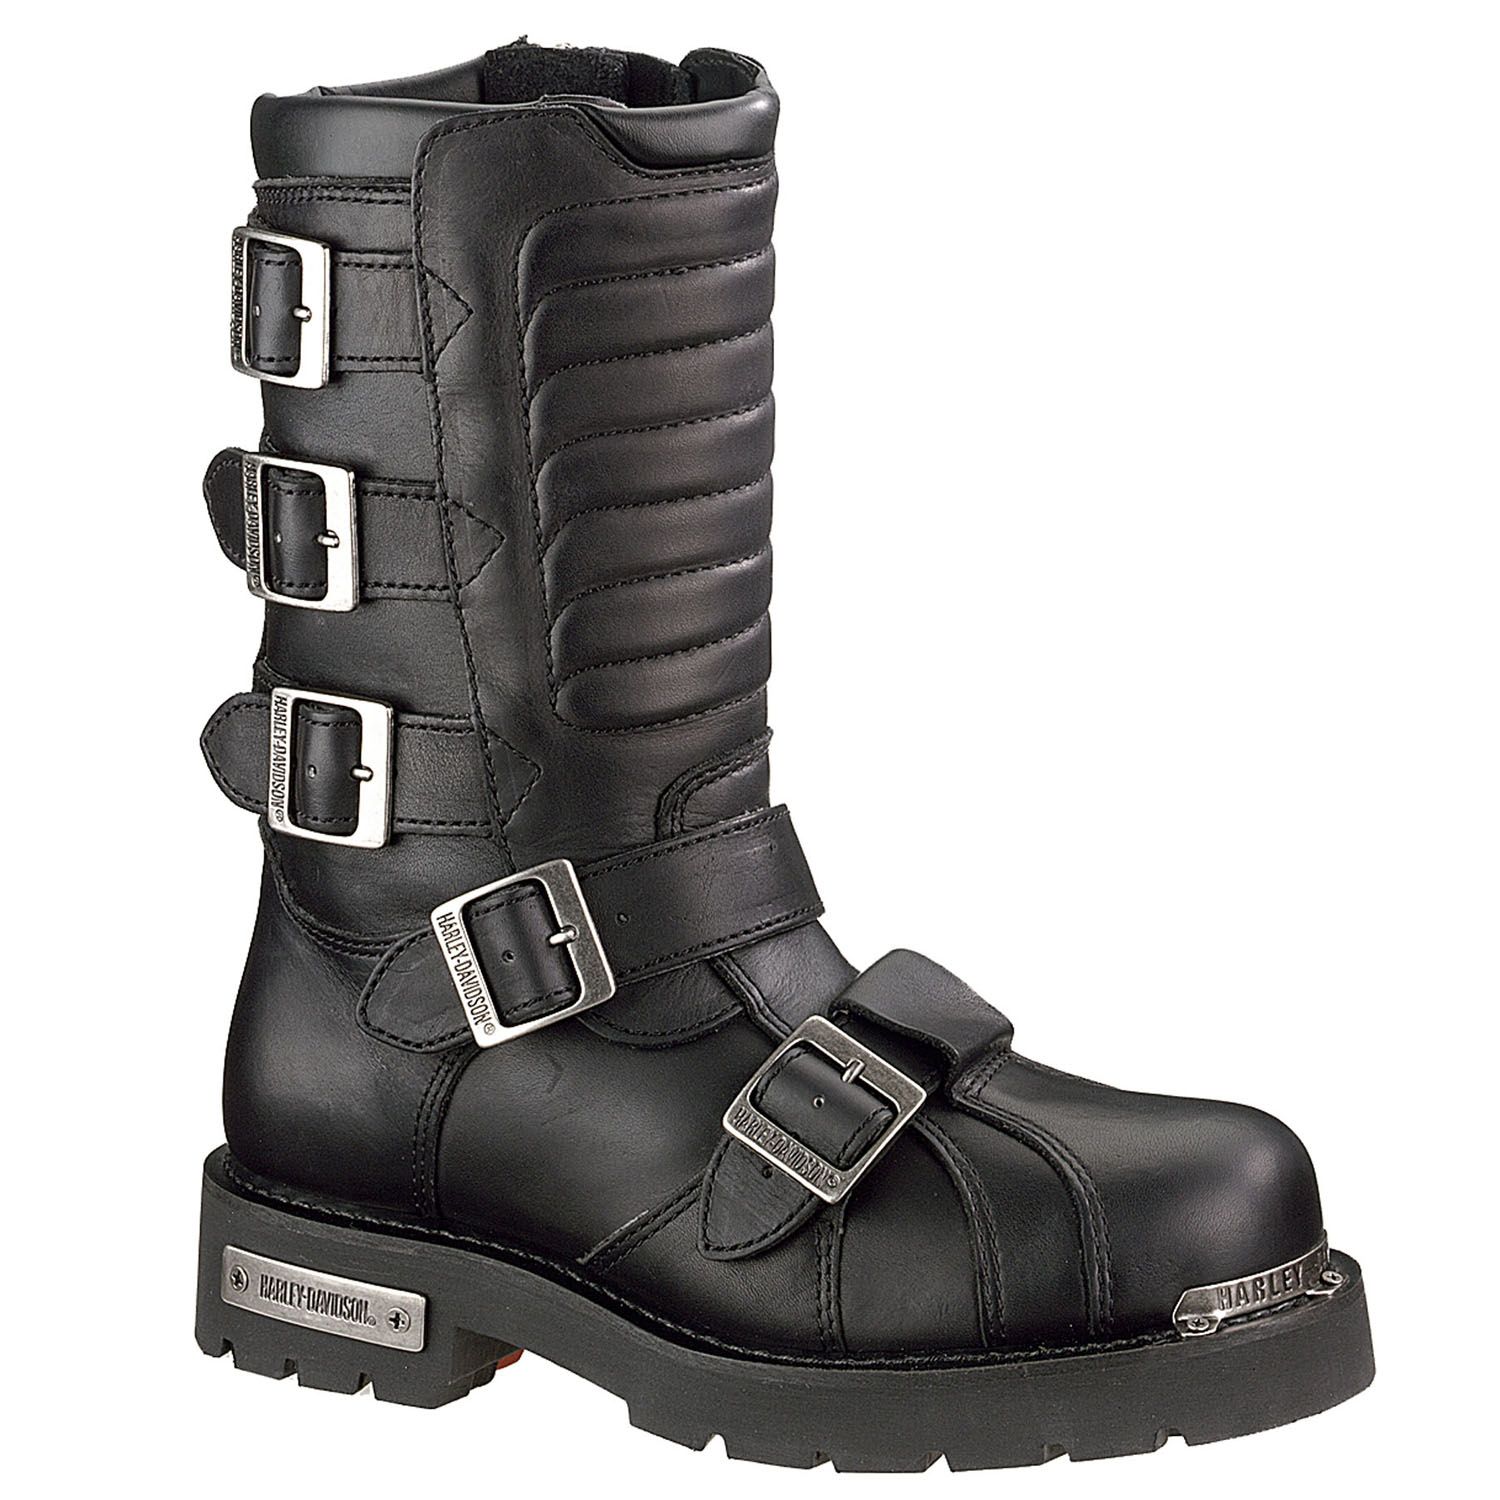 Harley Davidson Men S Boots Side Light Leather Biker Black D91687 Clothing Shoes Jewelry Shoes Men S Shoes Men S Work Shoes Boots